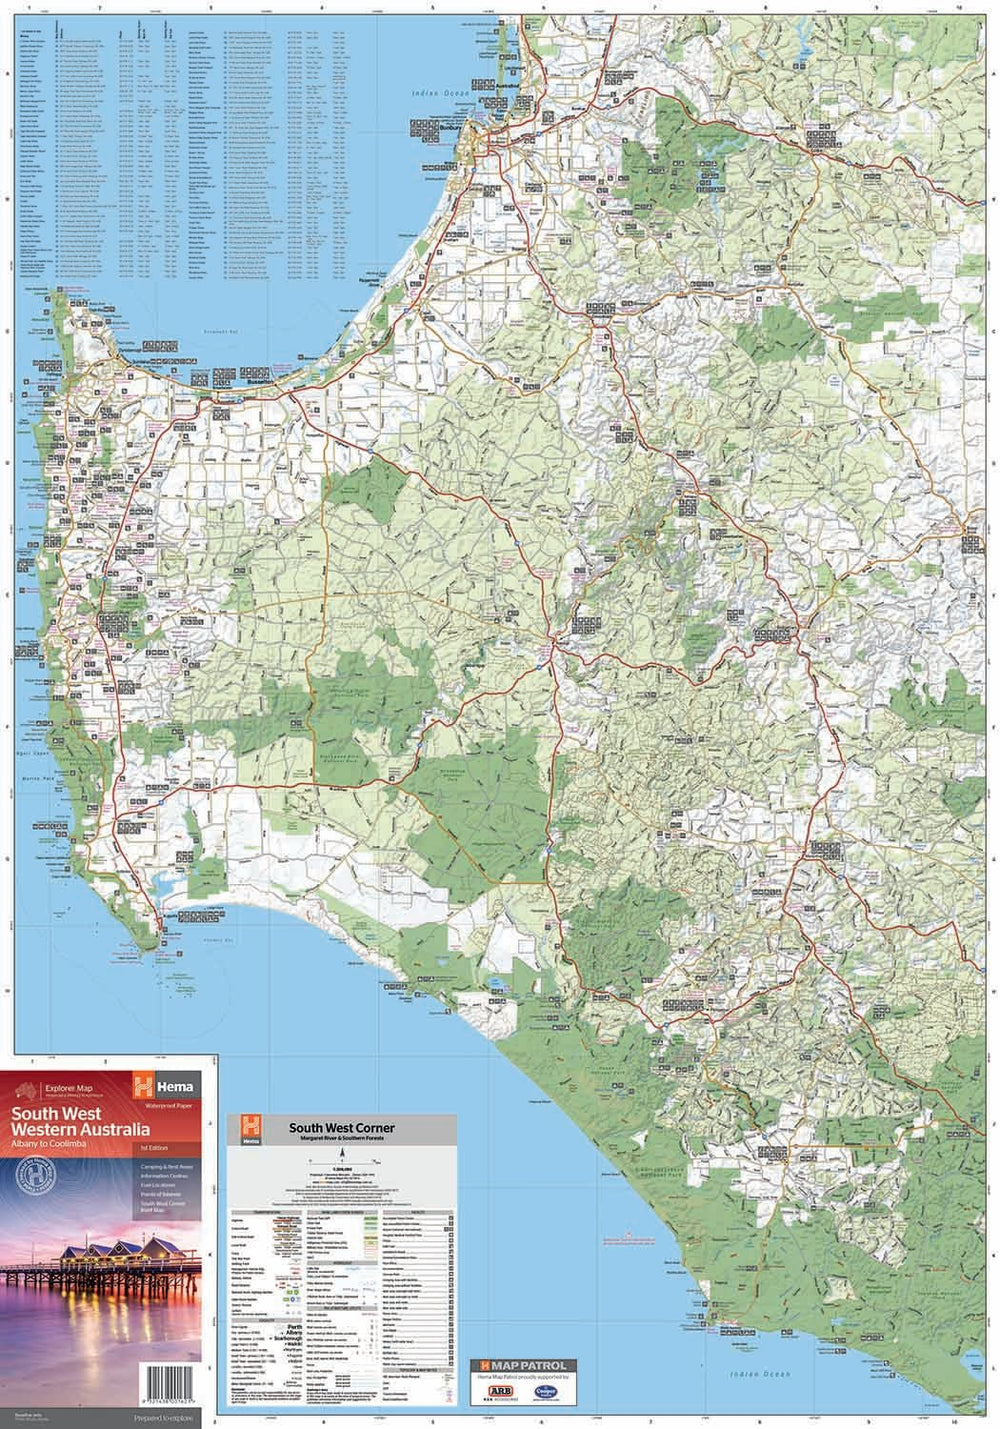 South West Western Australia Map - Hema Maps - 9321438001621 -Caravan World Australia